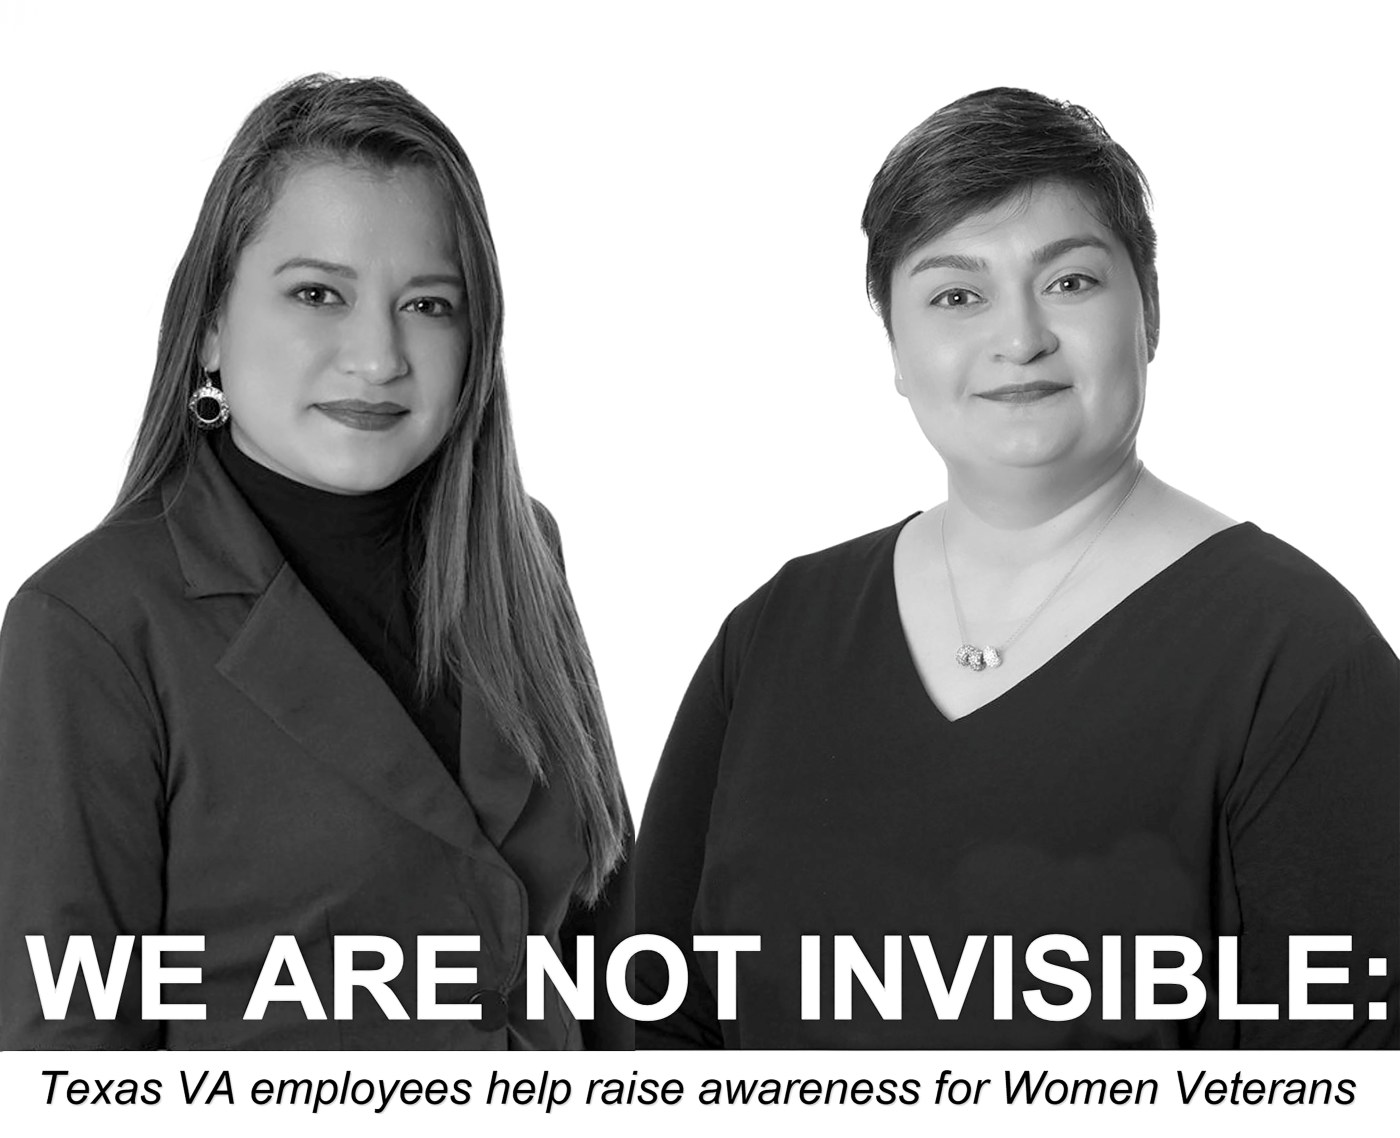 Texas VA employees help raise awareness for fellow Women Veterans